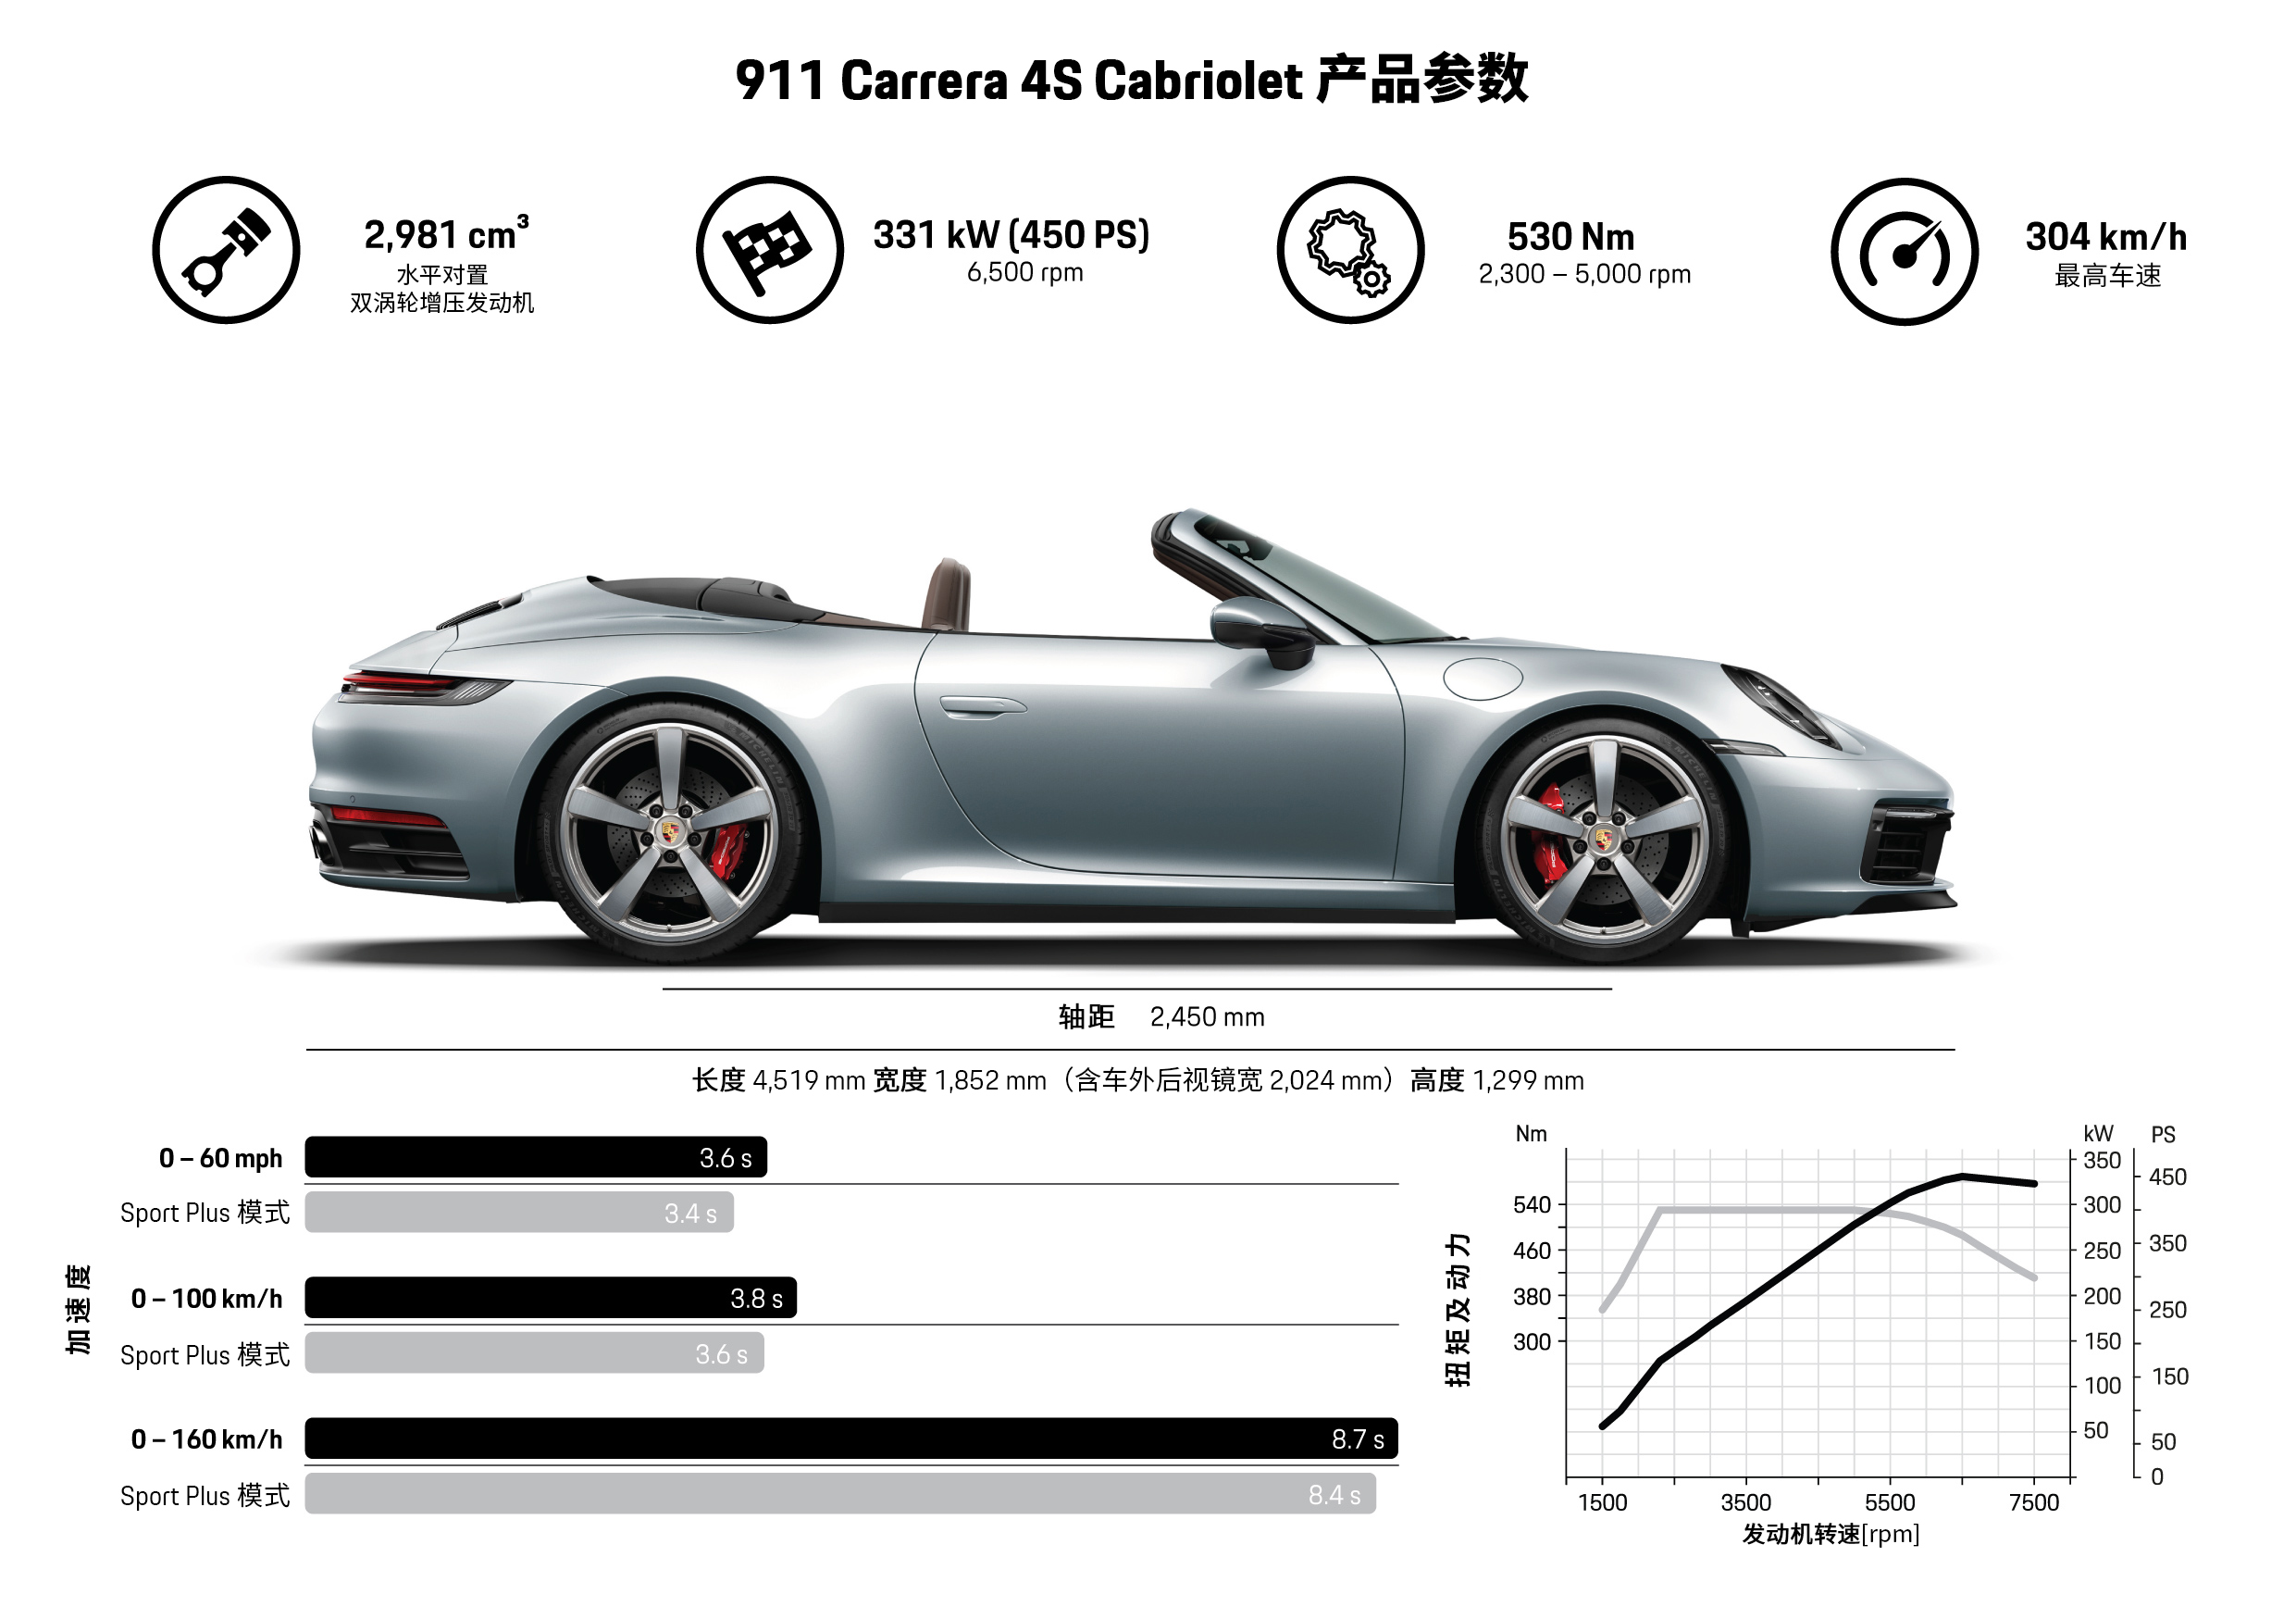 保时捷 911 Carrera 4S Cabriolet 信息图